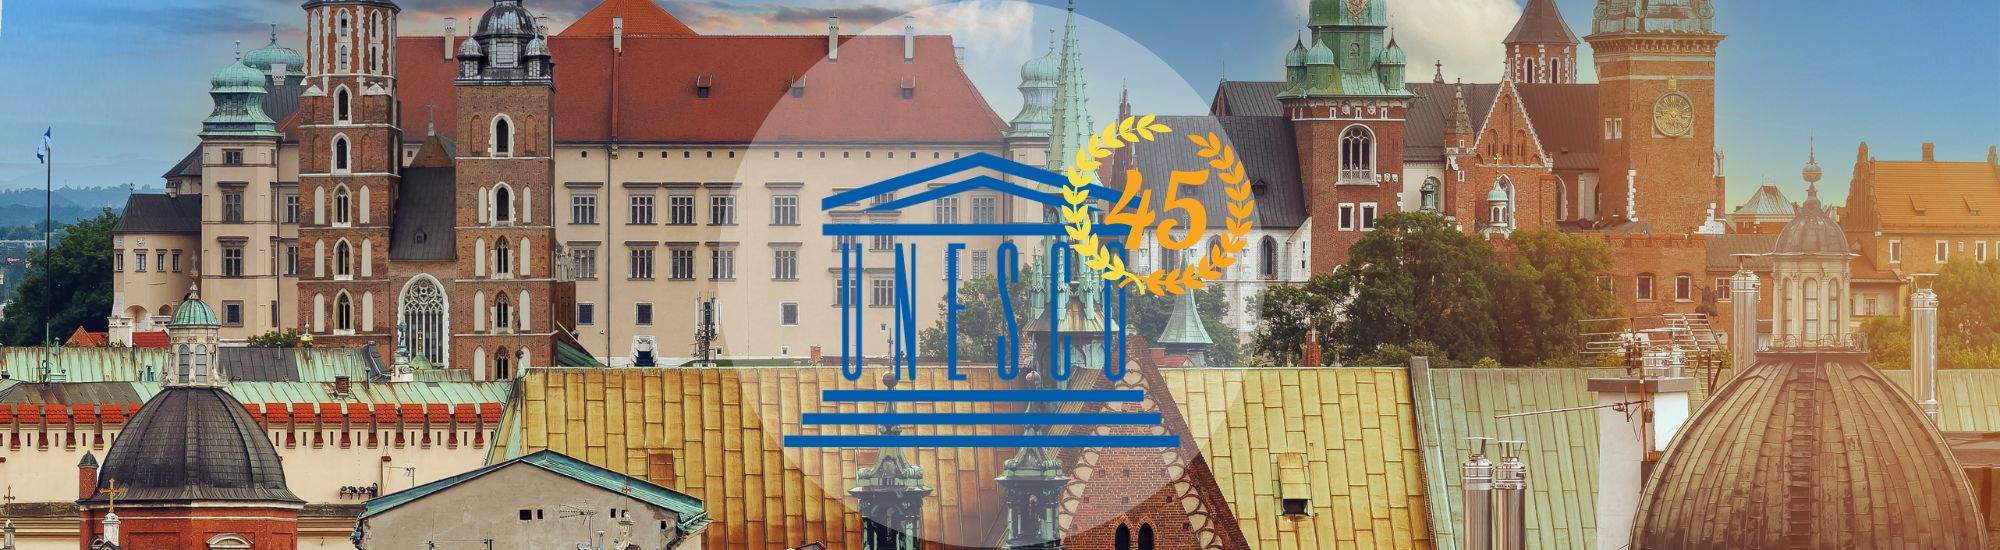 Krakau feiert das 45. Jubiläum seines UNESCO-Welterbes